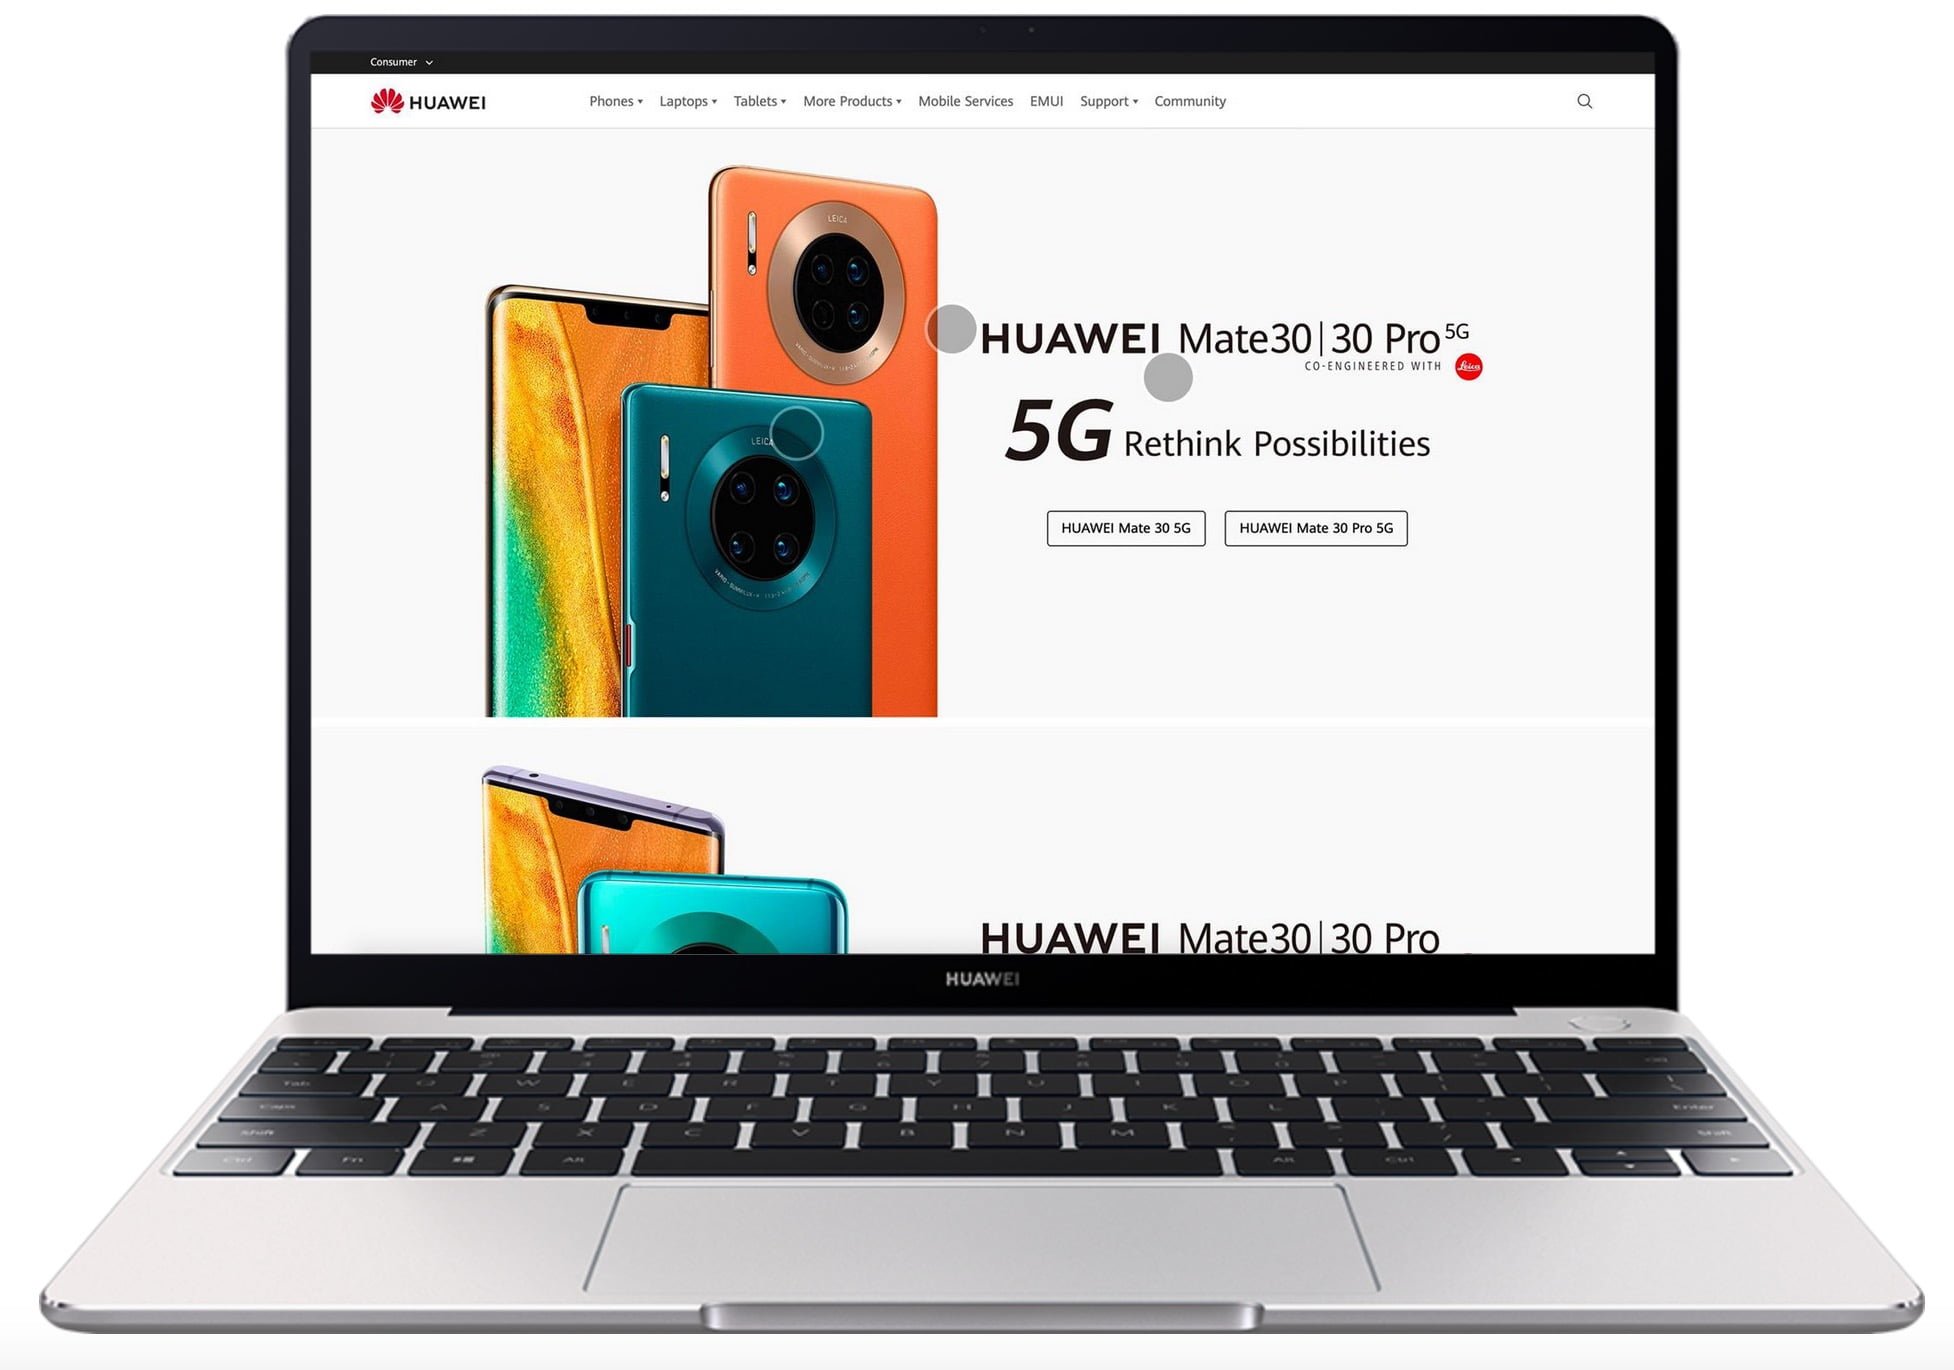 Huawei MateBook 13 (2020)